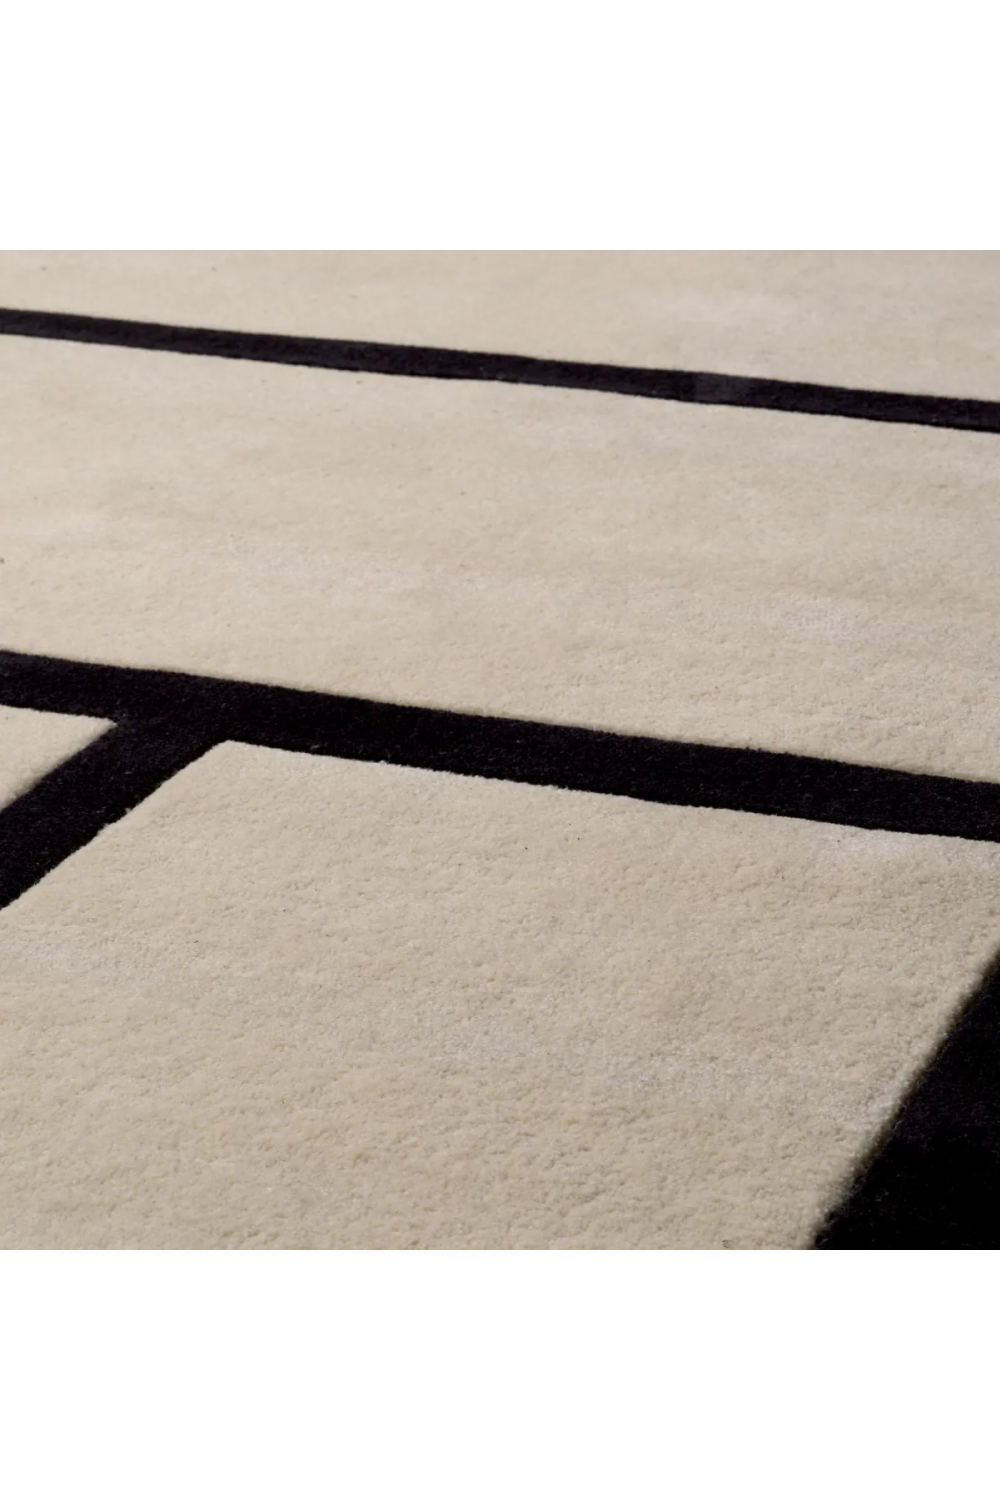 Off White Geometrical Wool Rug 10' x 13' | Eichholtz Omar | Oroa.com